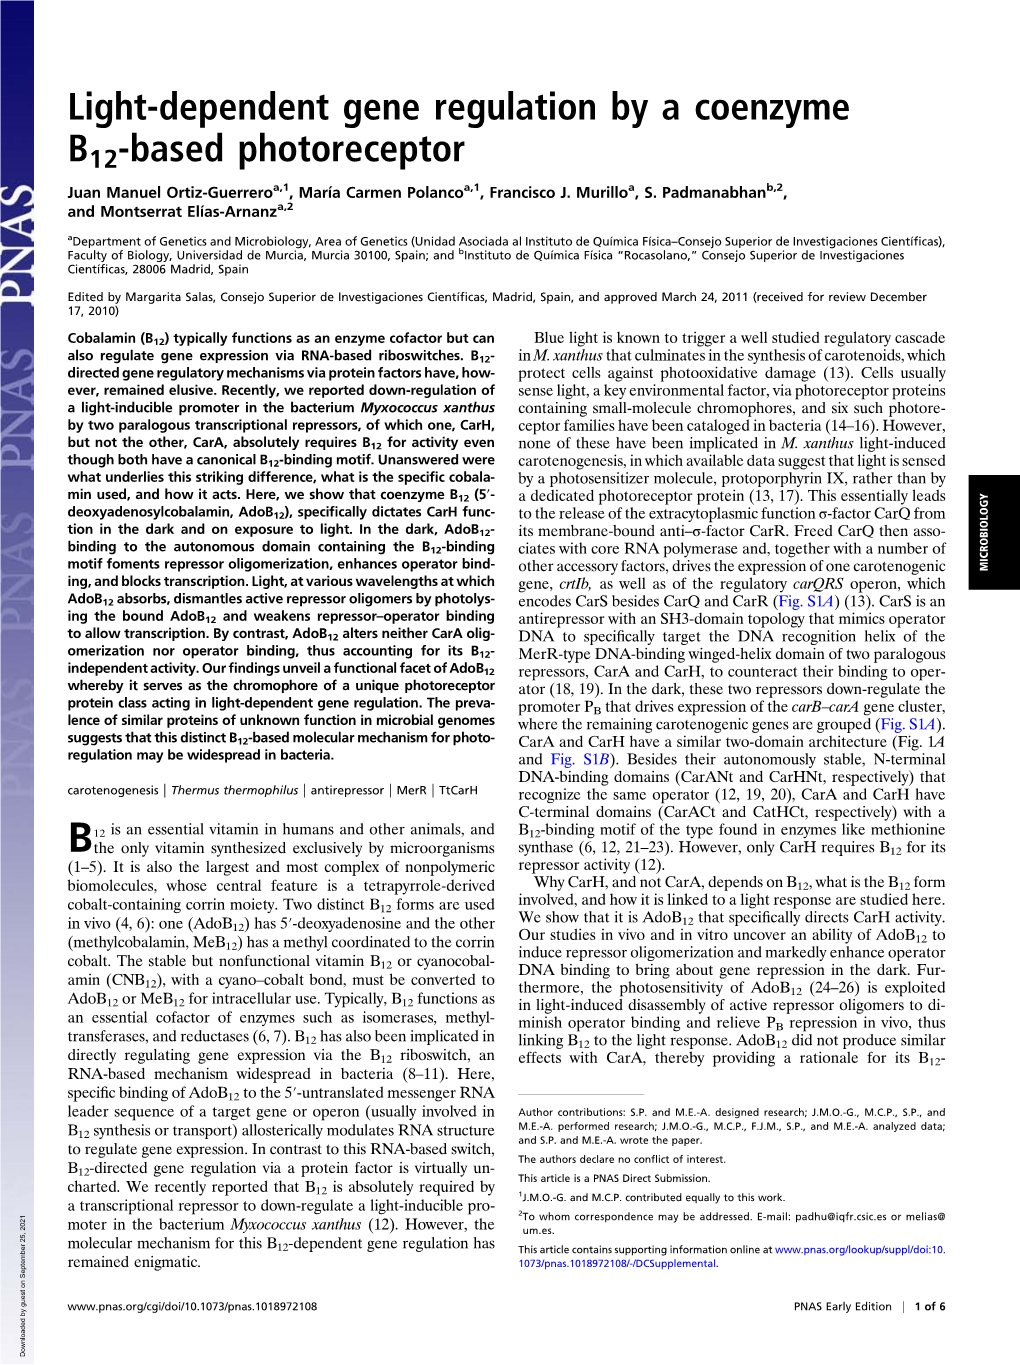 Light-Dependent Gene Regulation by a Coenzyme B12-Based Photoreceptor Juan Manuel Ortiz-Guerreroa,1, María Carmen Polancoa,1, Francisco J